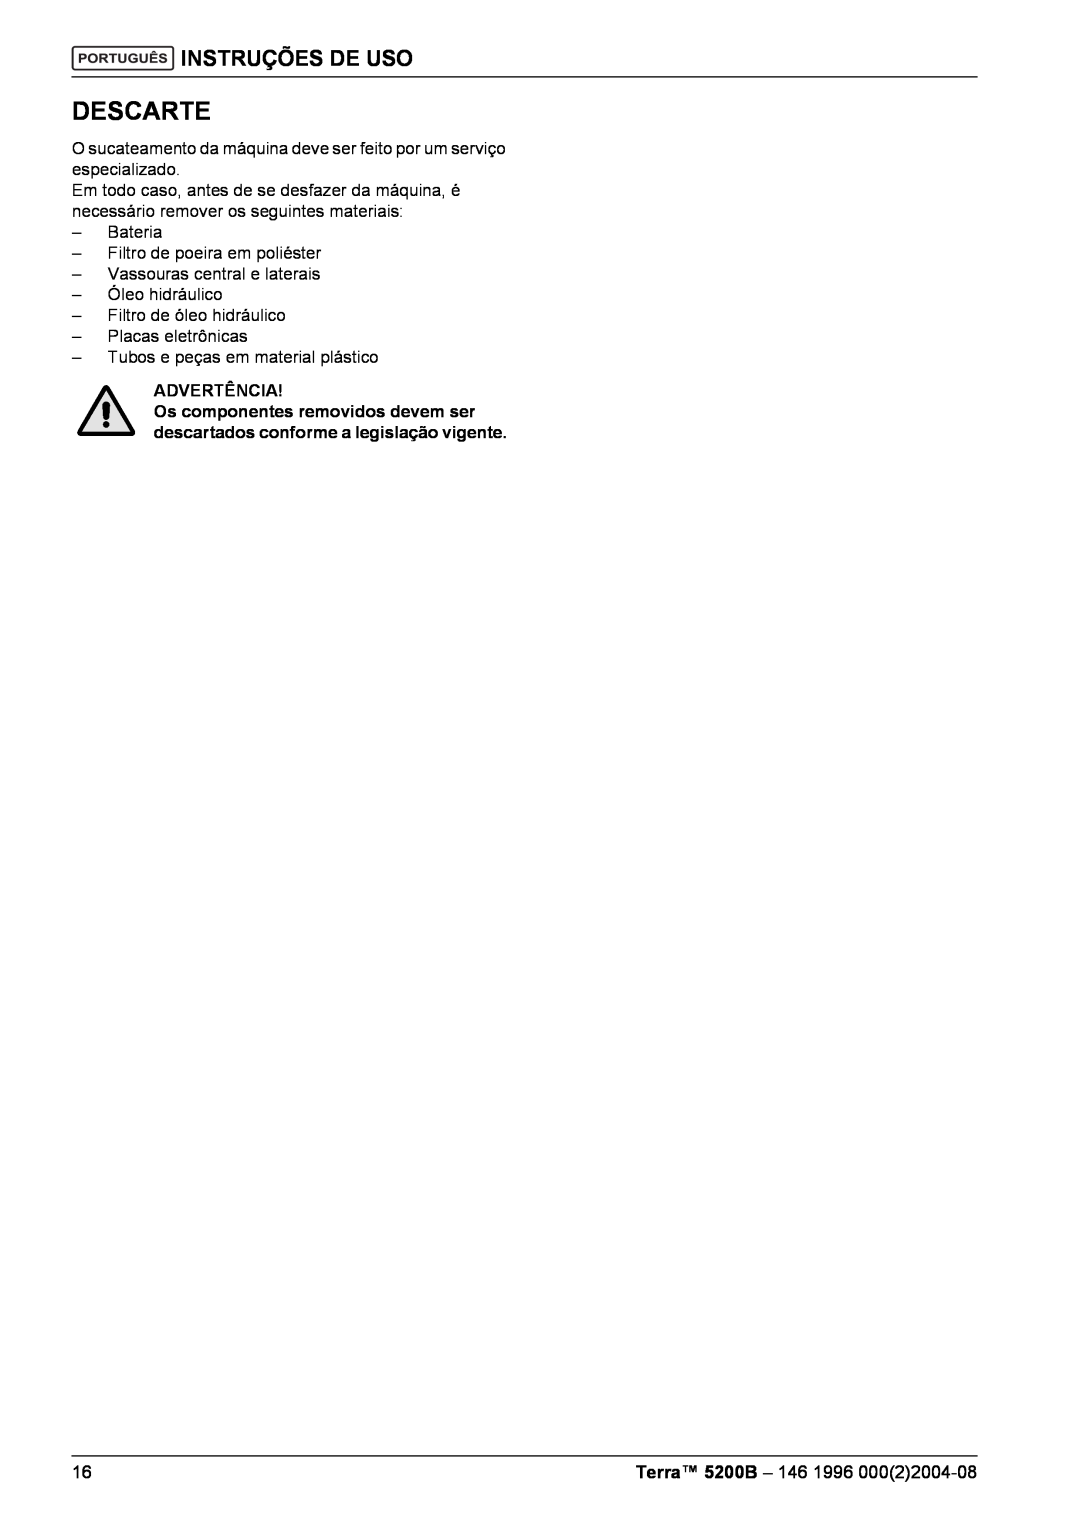 Nilfisk-Advance America 5200B manual Descarte, Instruções De Uso, Advertência 